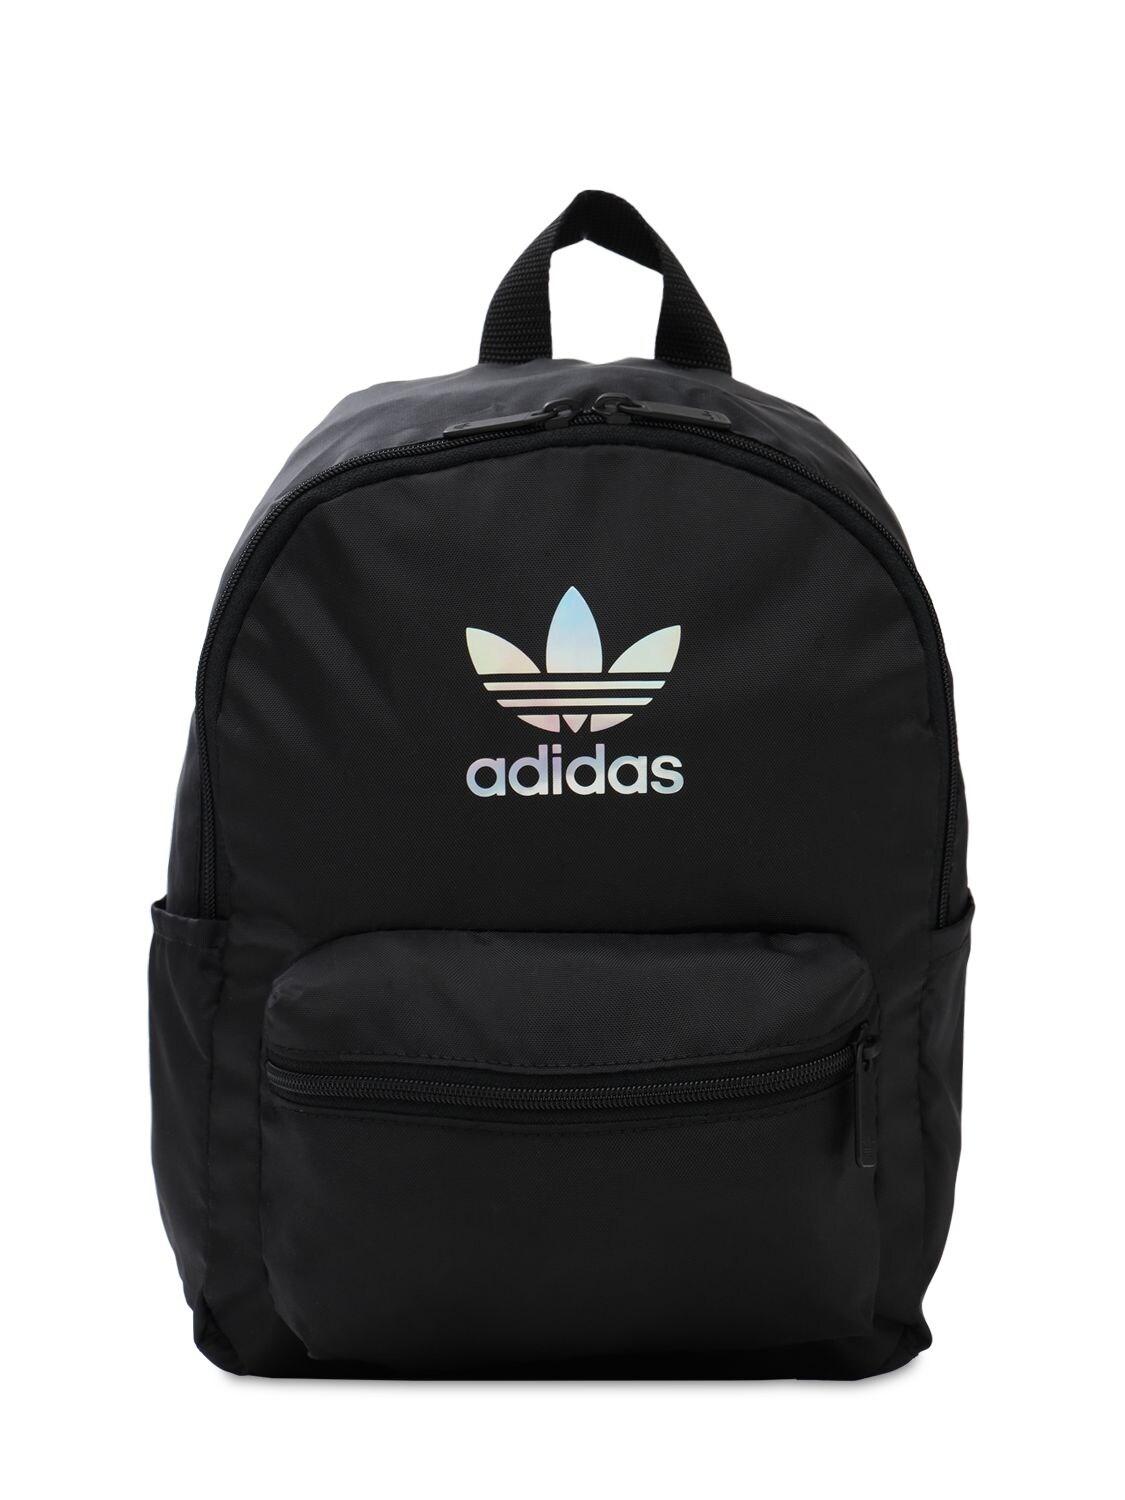 adidas Originals Small Adicolor Classic Backpack in Black | Lyst